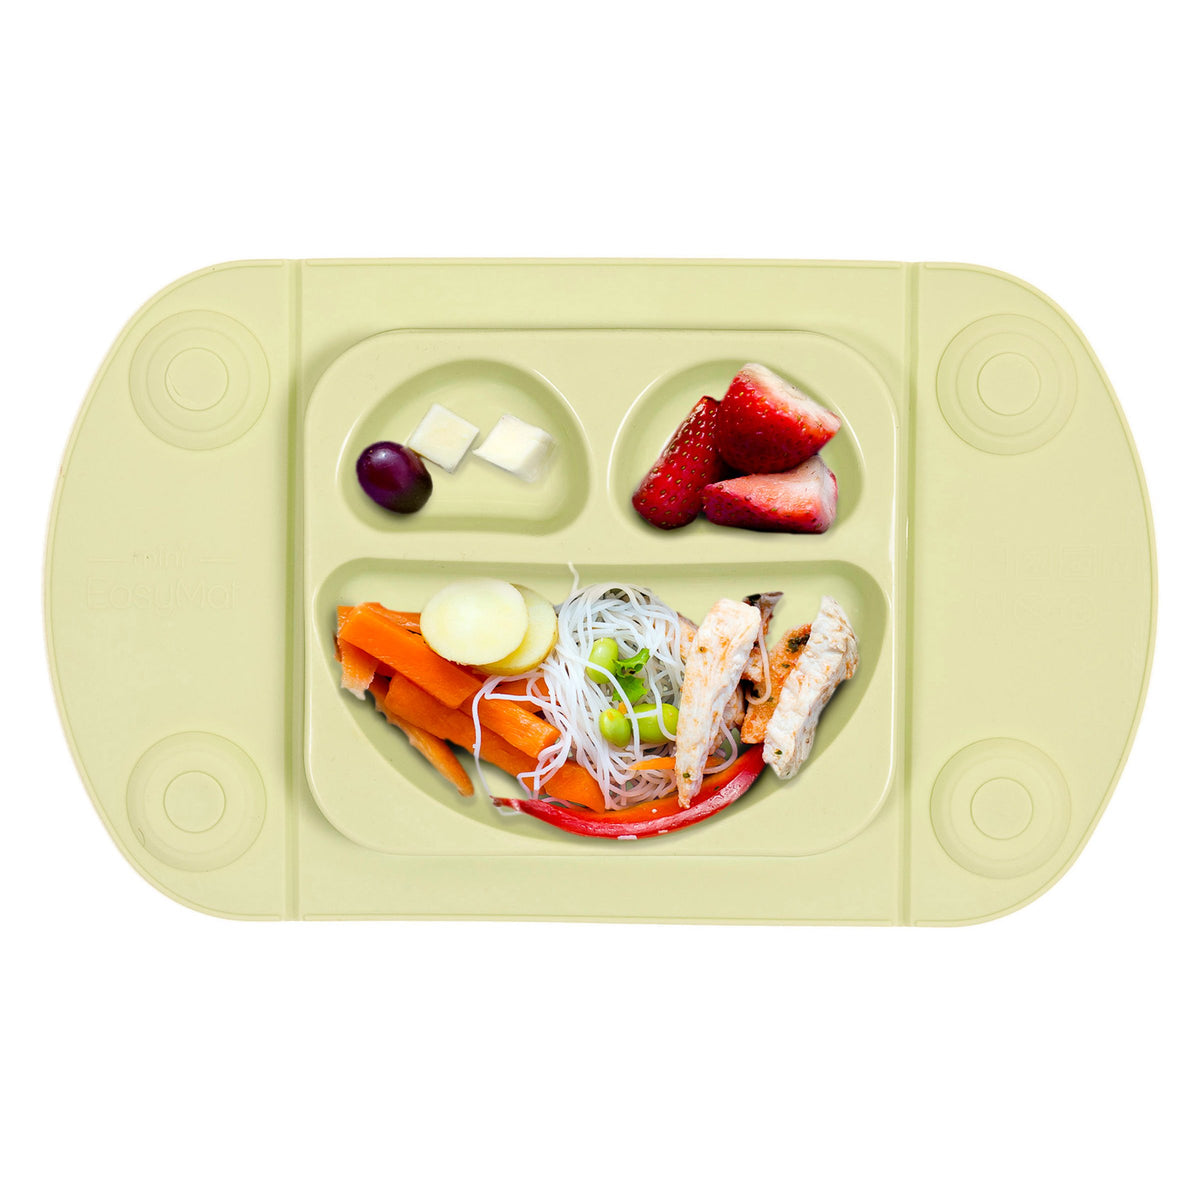 easymat-mini-portable-suction-plate-olive- (3)